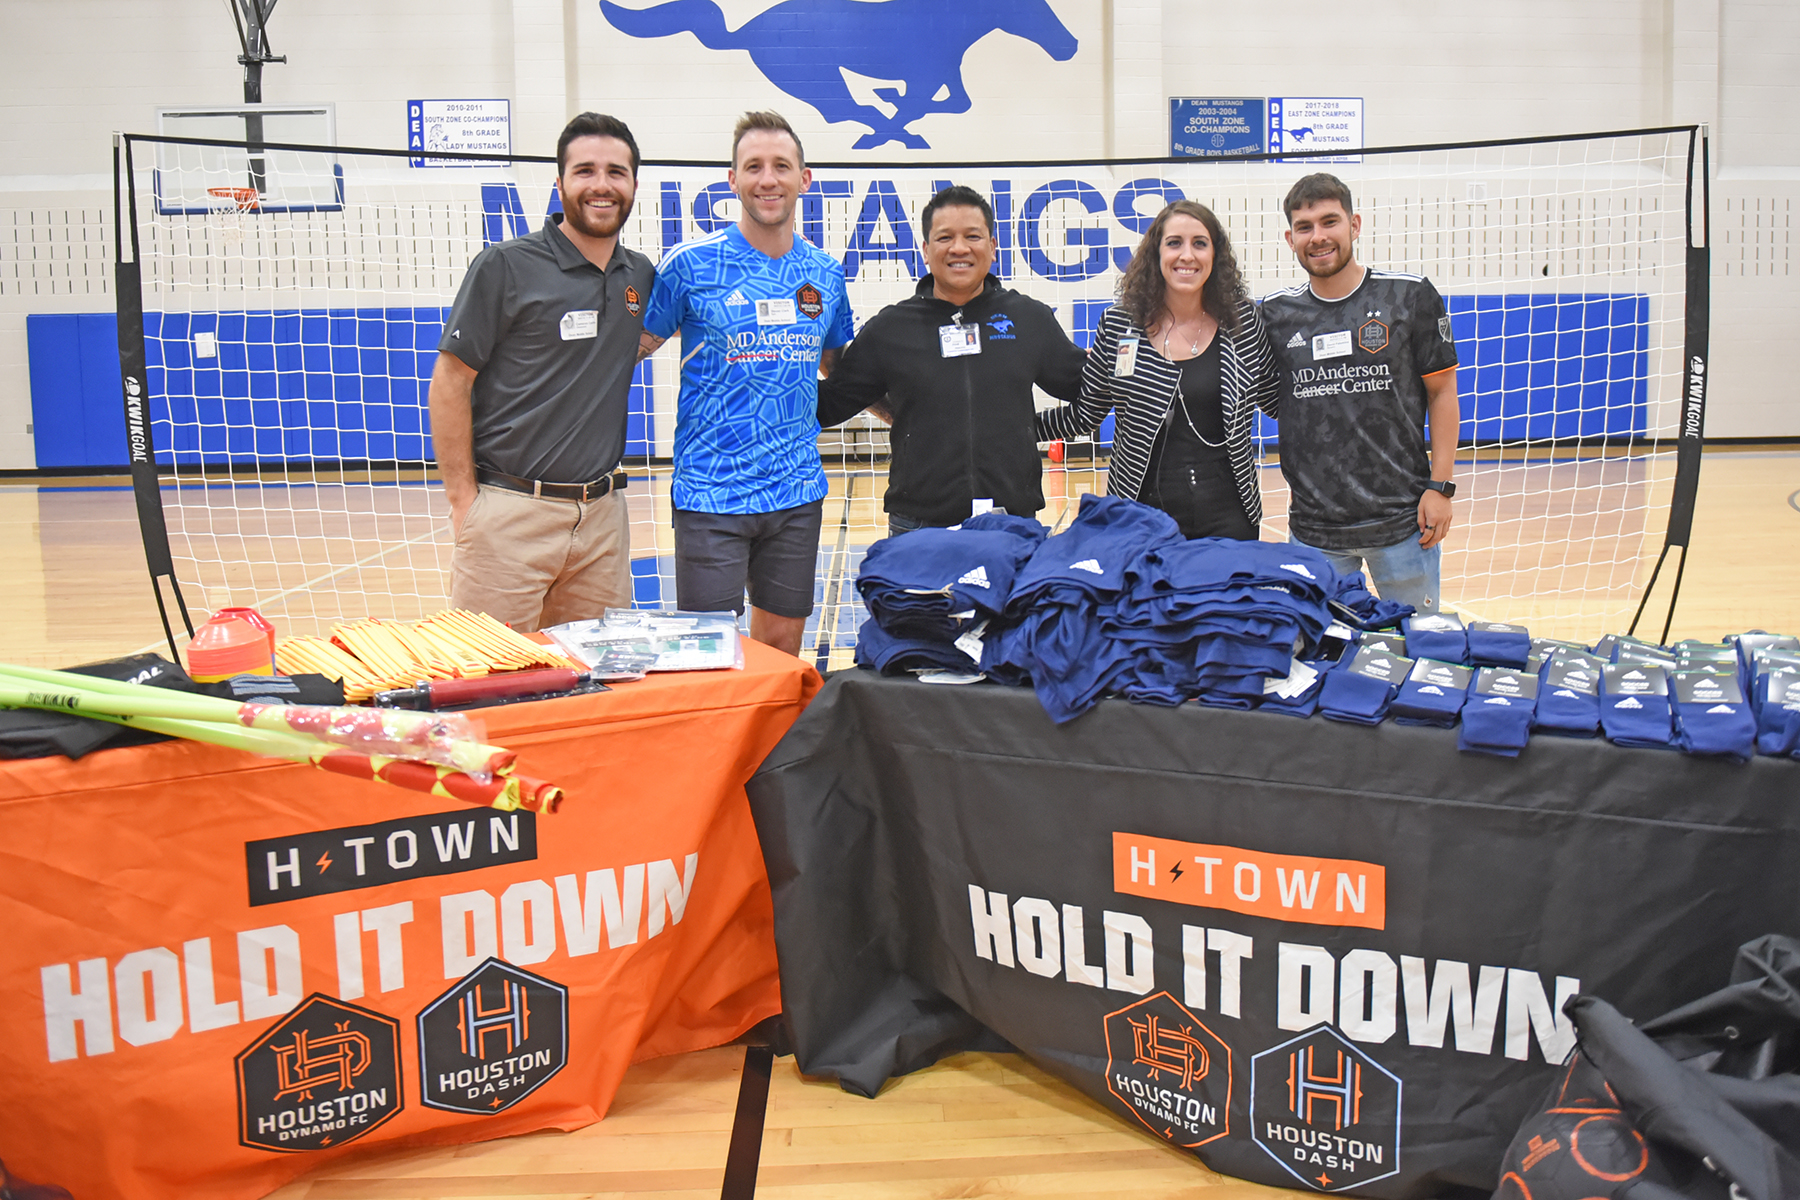 Dean MS Receives Soccer Gear from Houston Dynamo Through Charitable Program